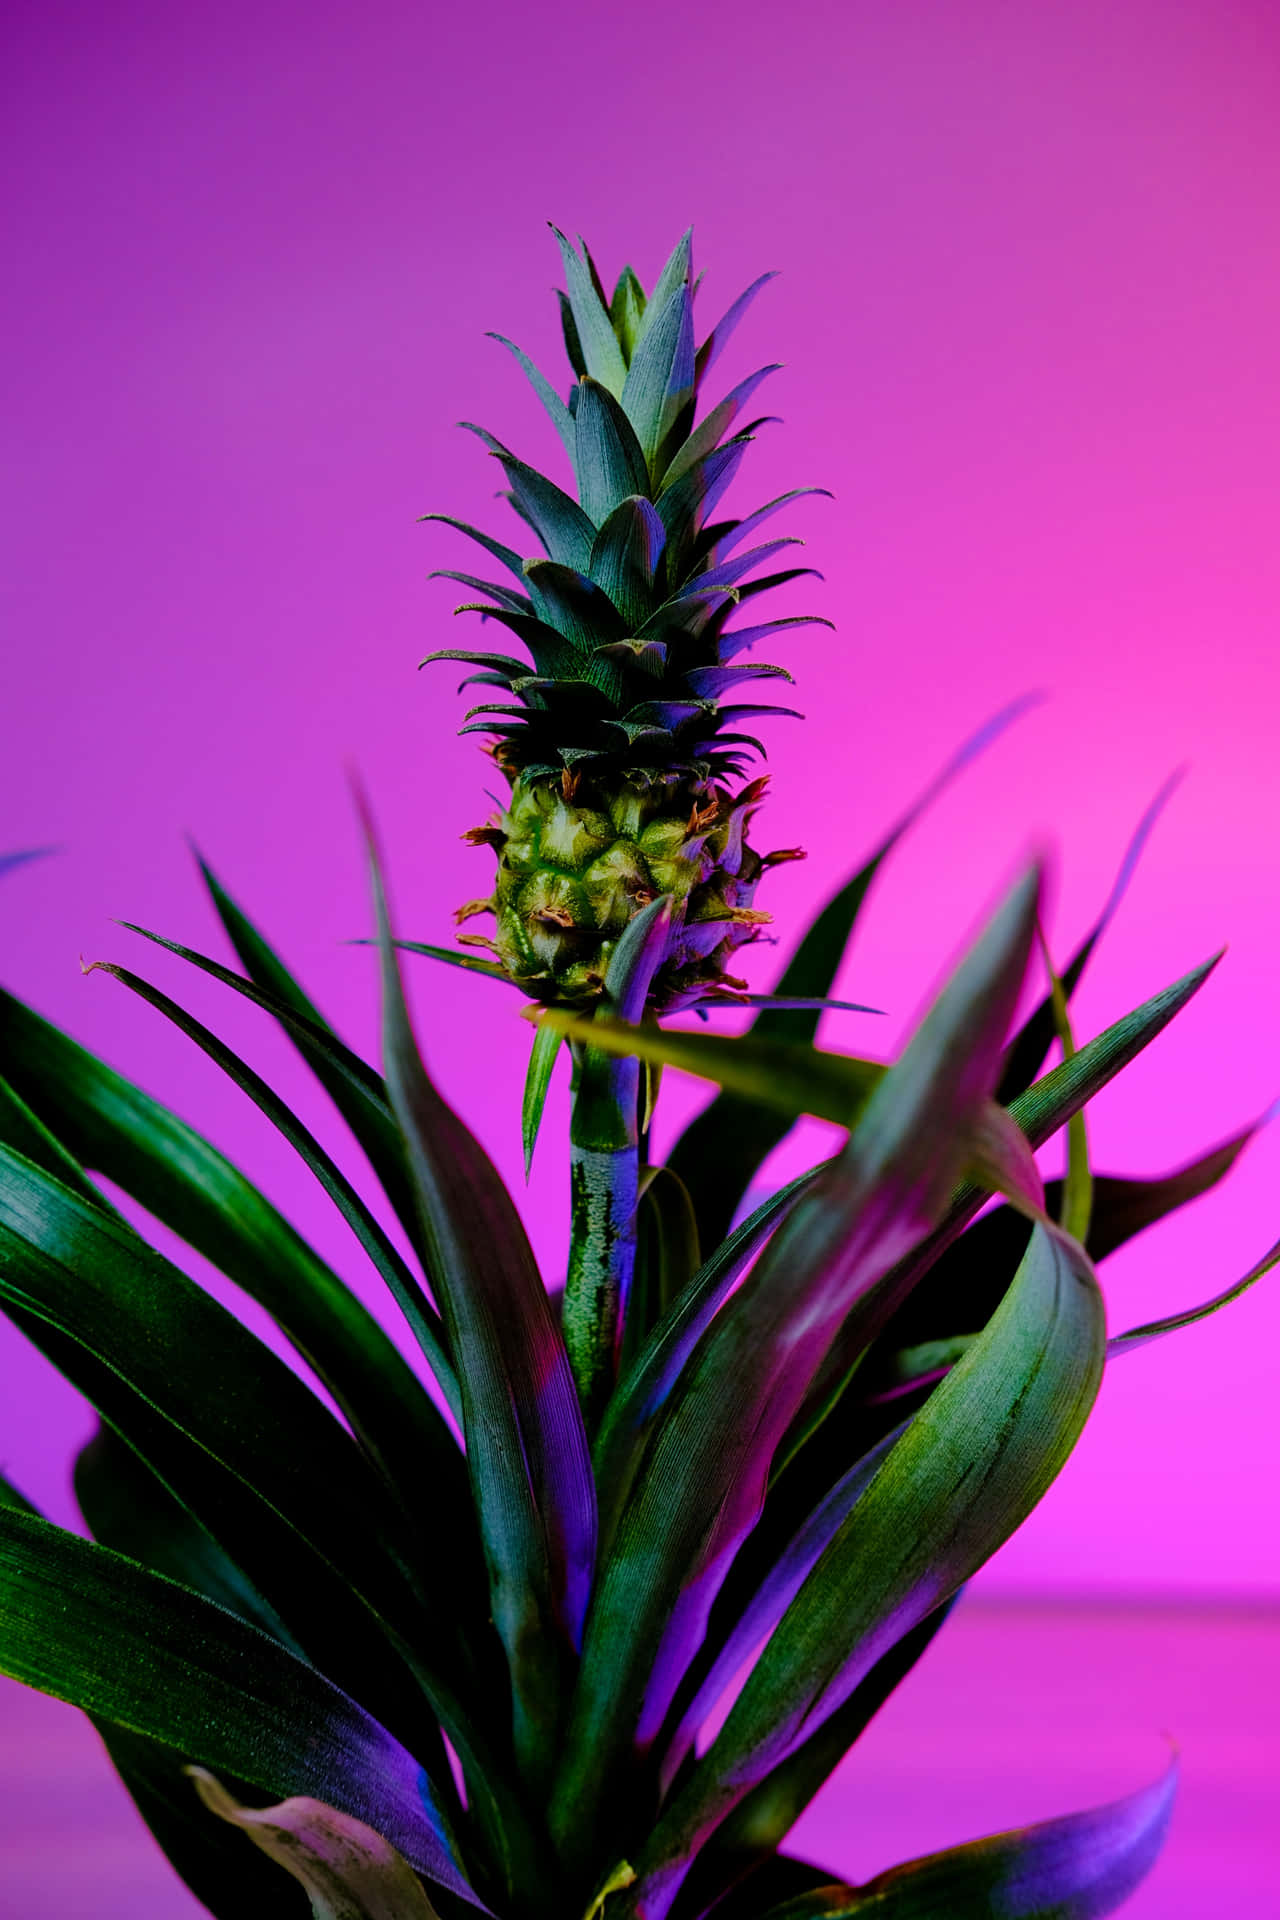 Pineapple split in half showing its sweet, juicy interior